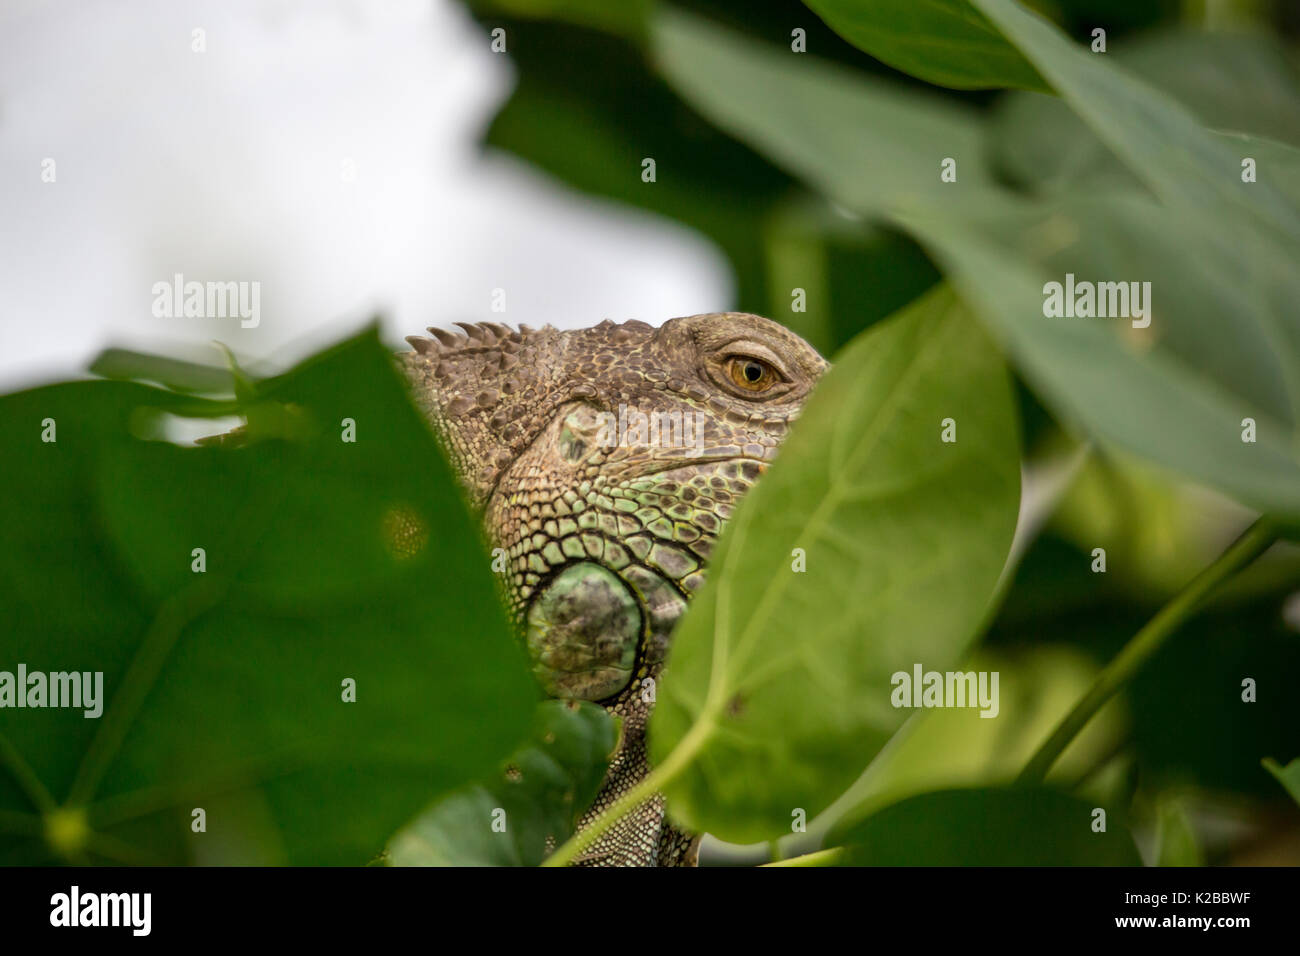 Common Green Iguana Hiding behind Leafs, Rainforest Stock Photo